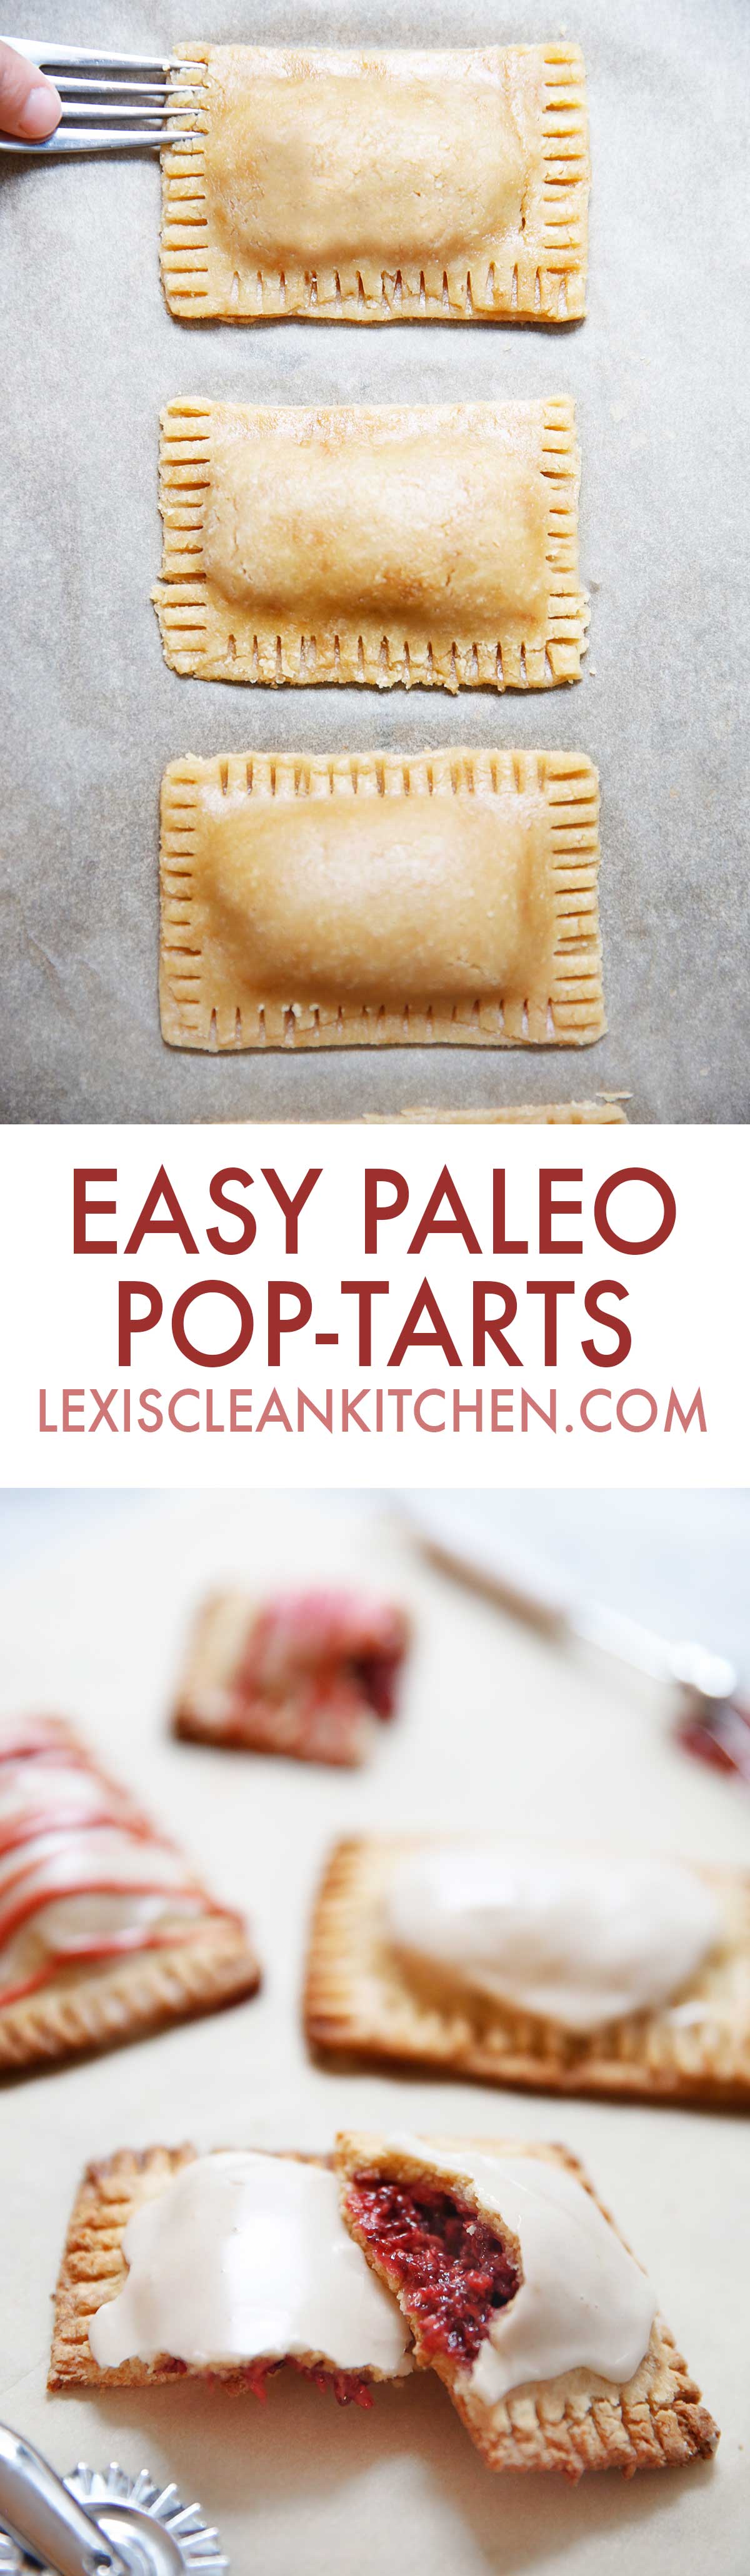 homemade healthier pop tarts (gluten-free + how-to video)